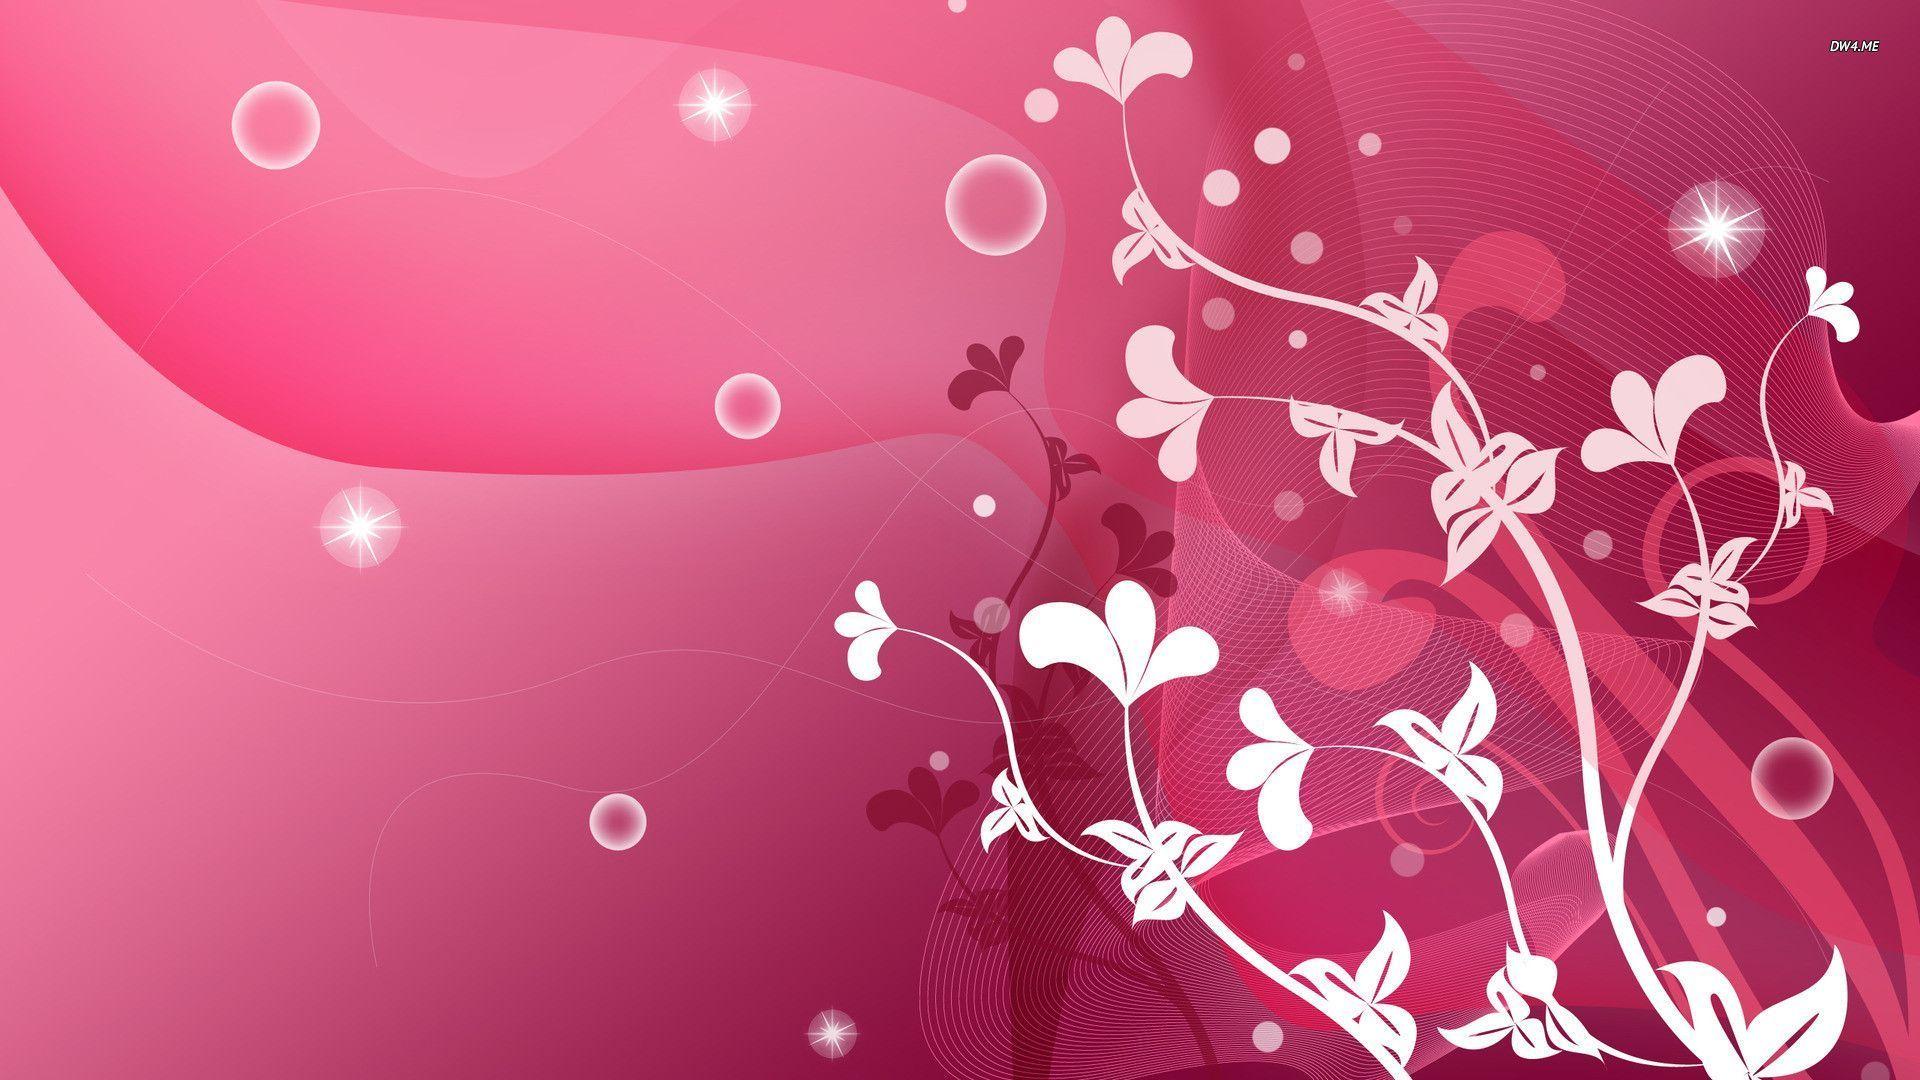 Plants on pink curves wallpaper wallpaper - #